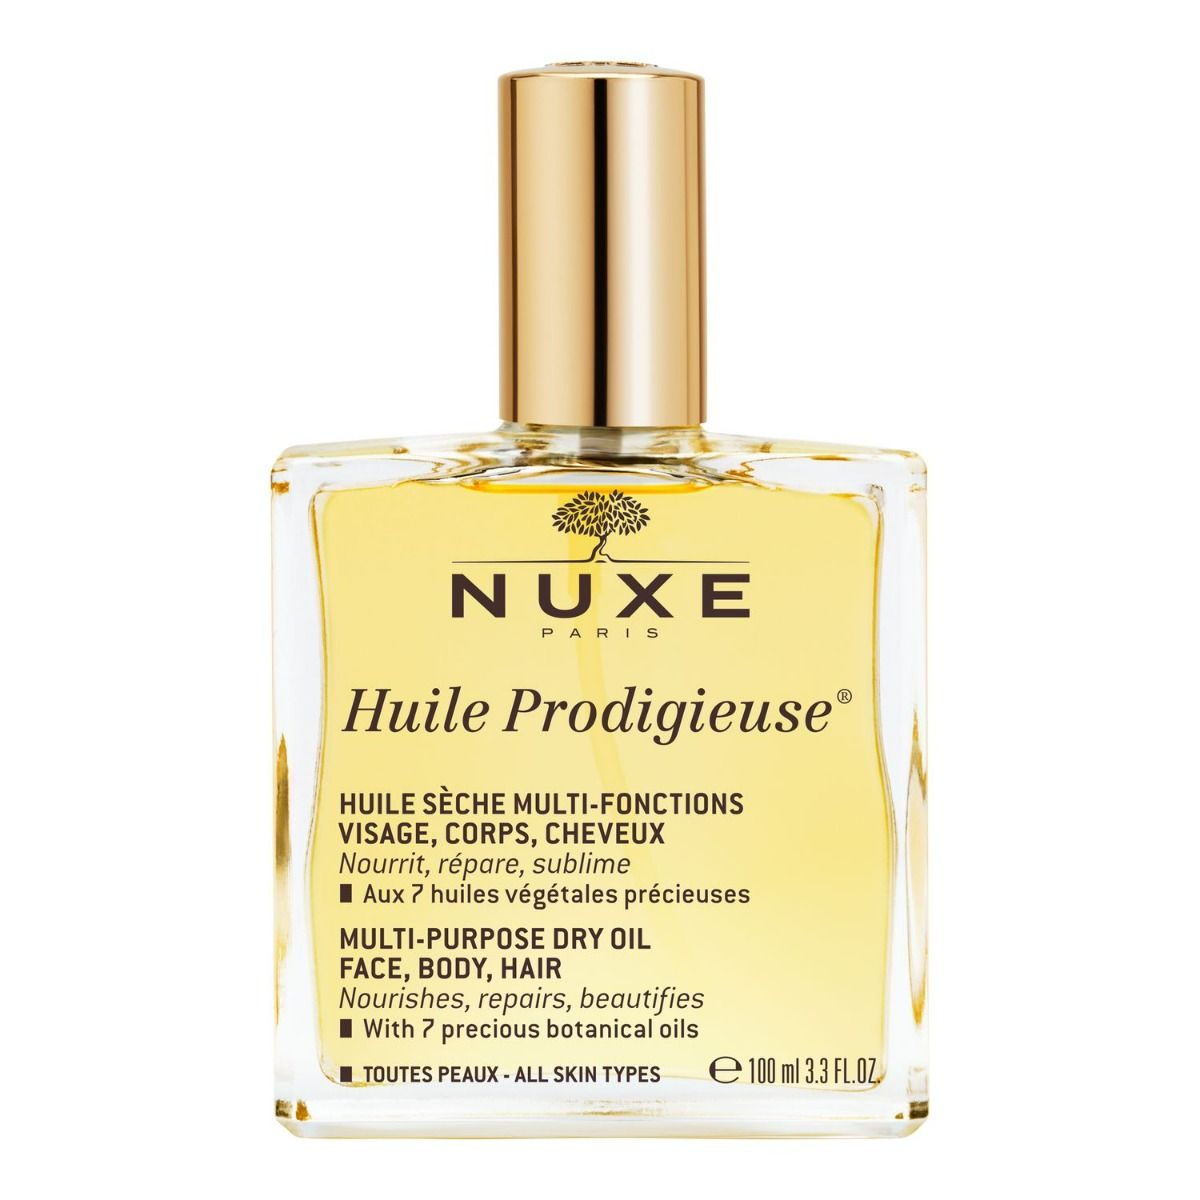 Nuxe Huile Prodigieuse масло для лица, тела и волос, 100 ml gernetic huile de beuate beauty oil масло для лица и тела масло красоты 500 мл